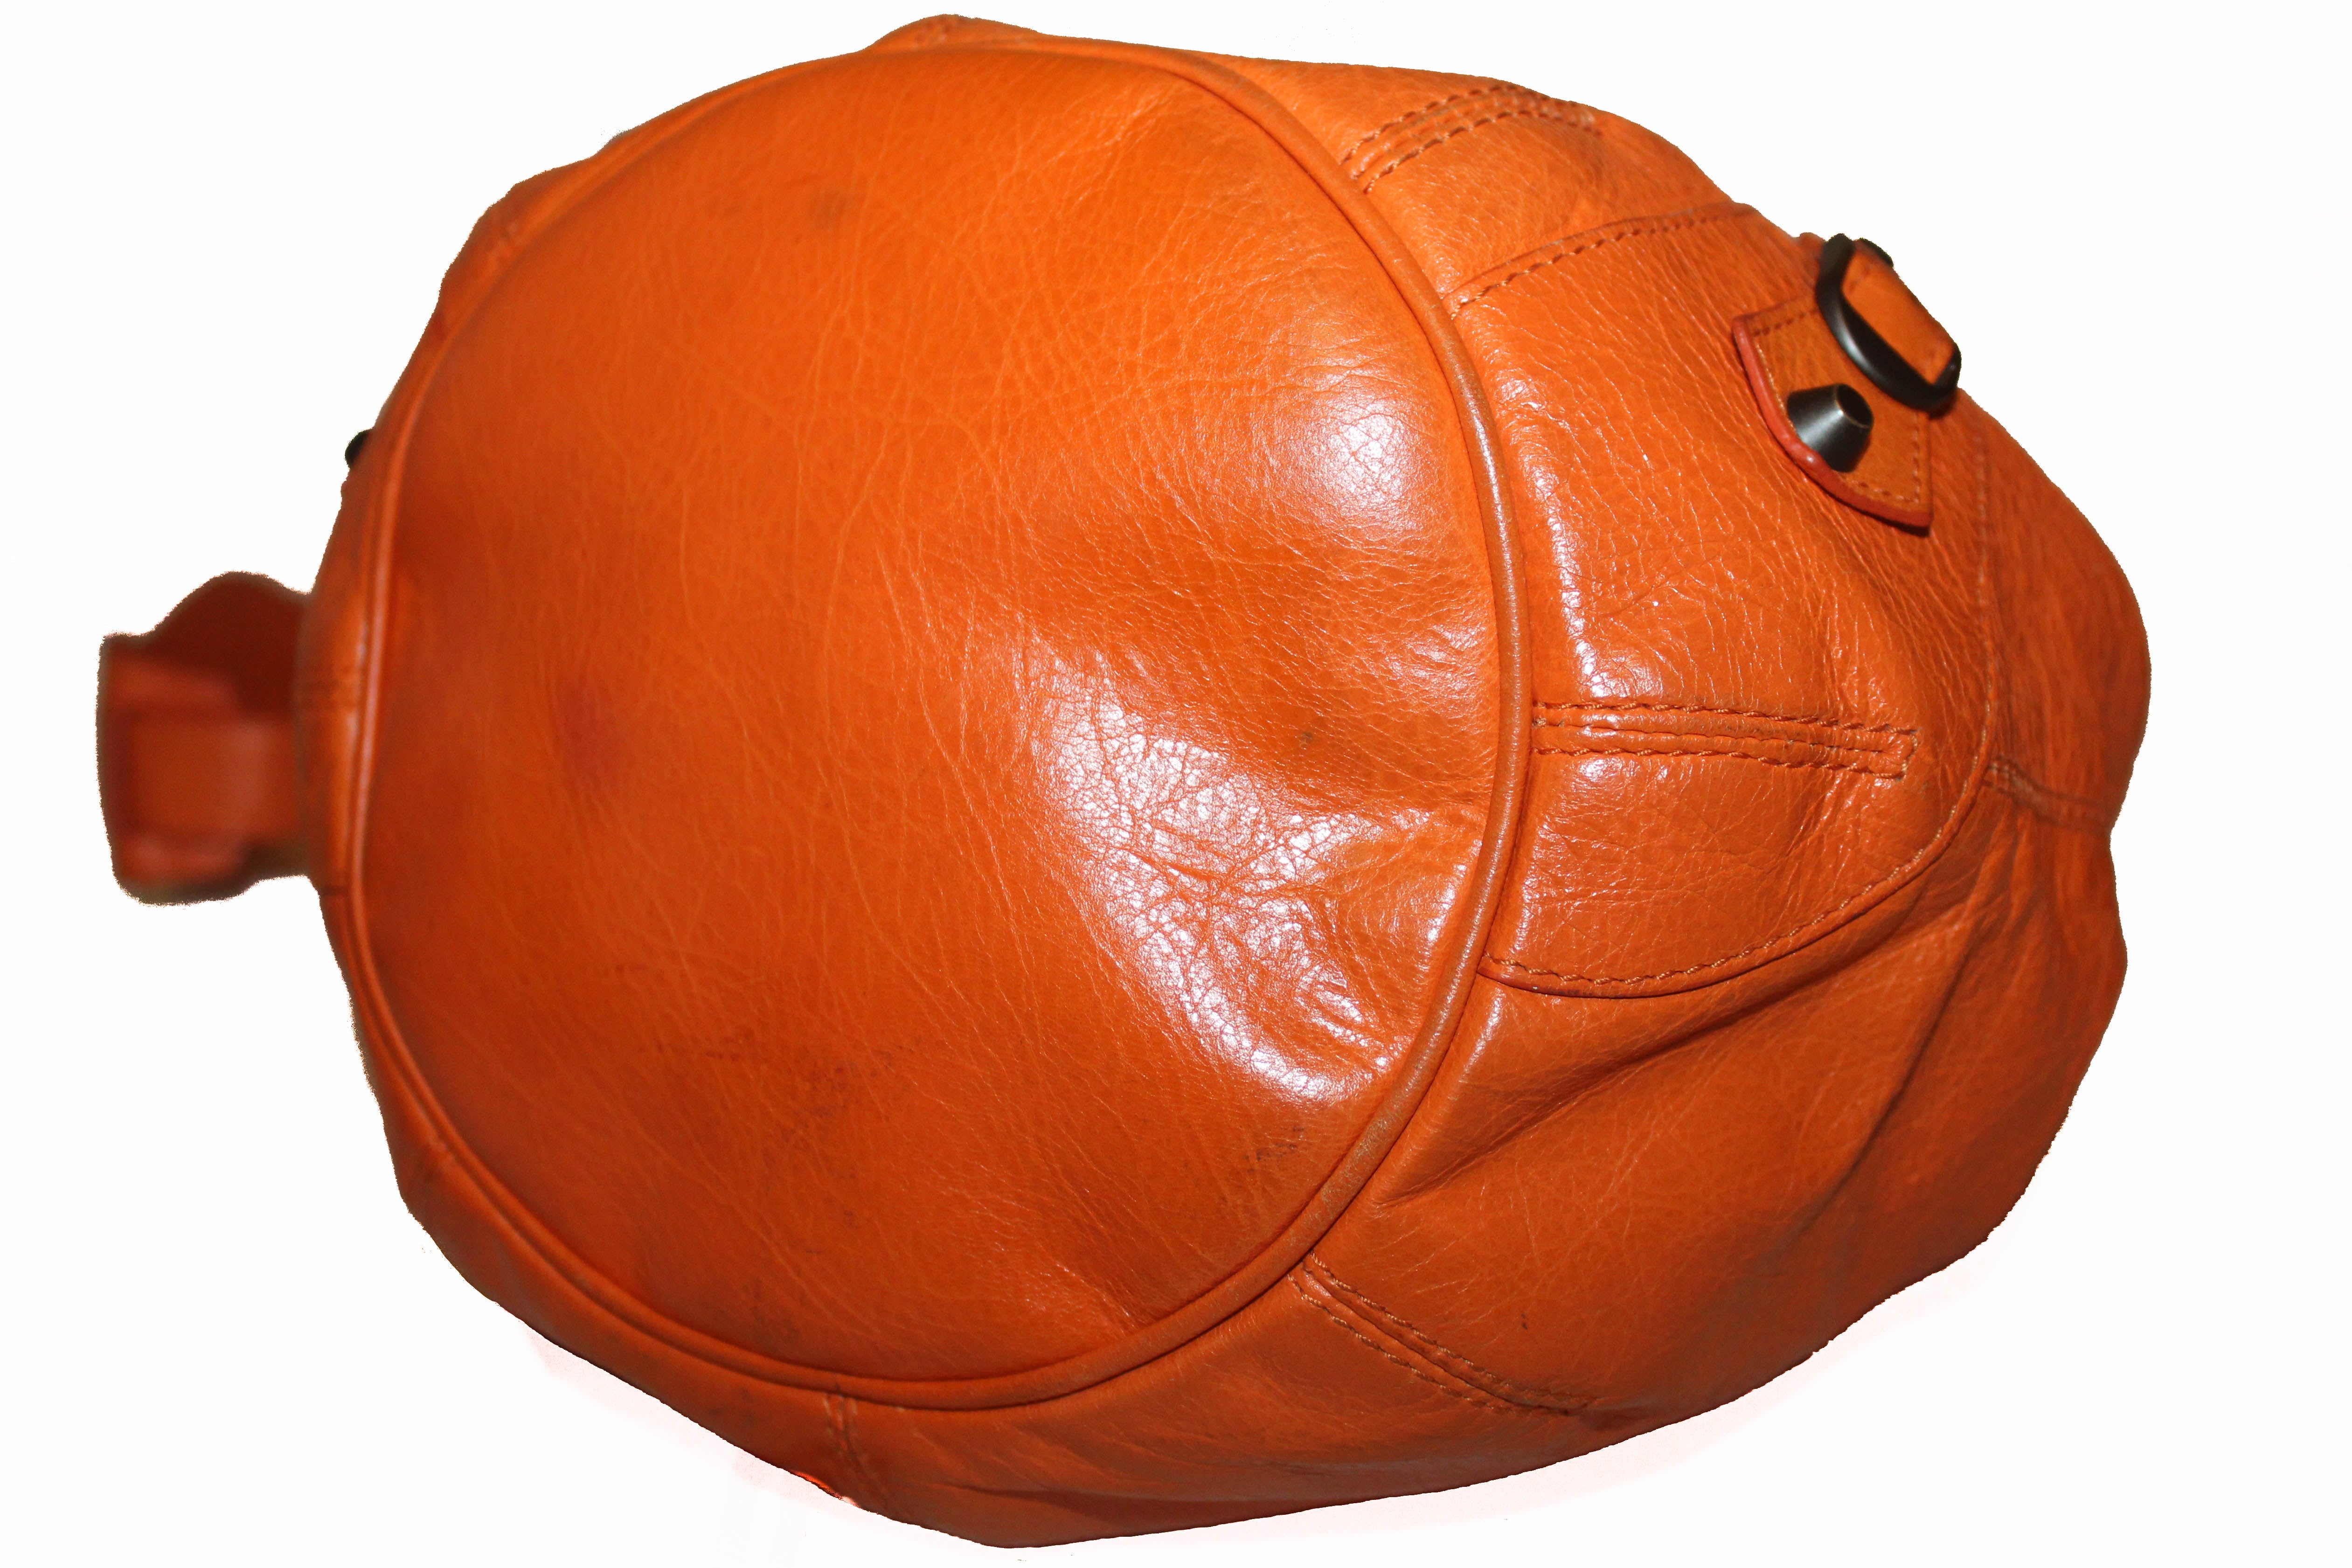 Authentic Balenciaga Orange Lambskin Leather Mini Pompon Bucket Crossbody